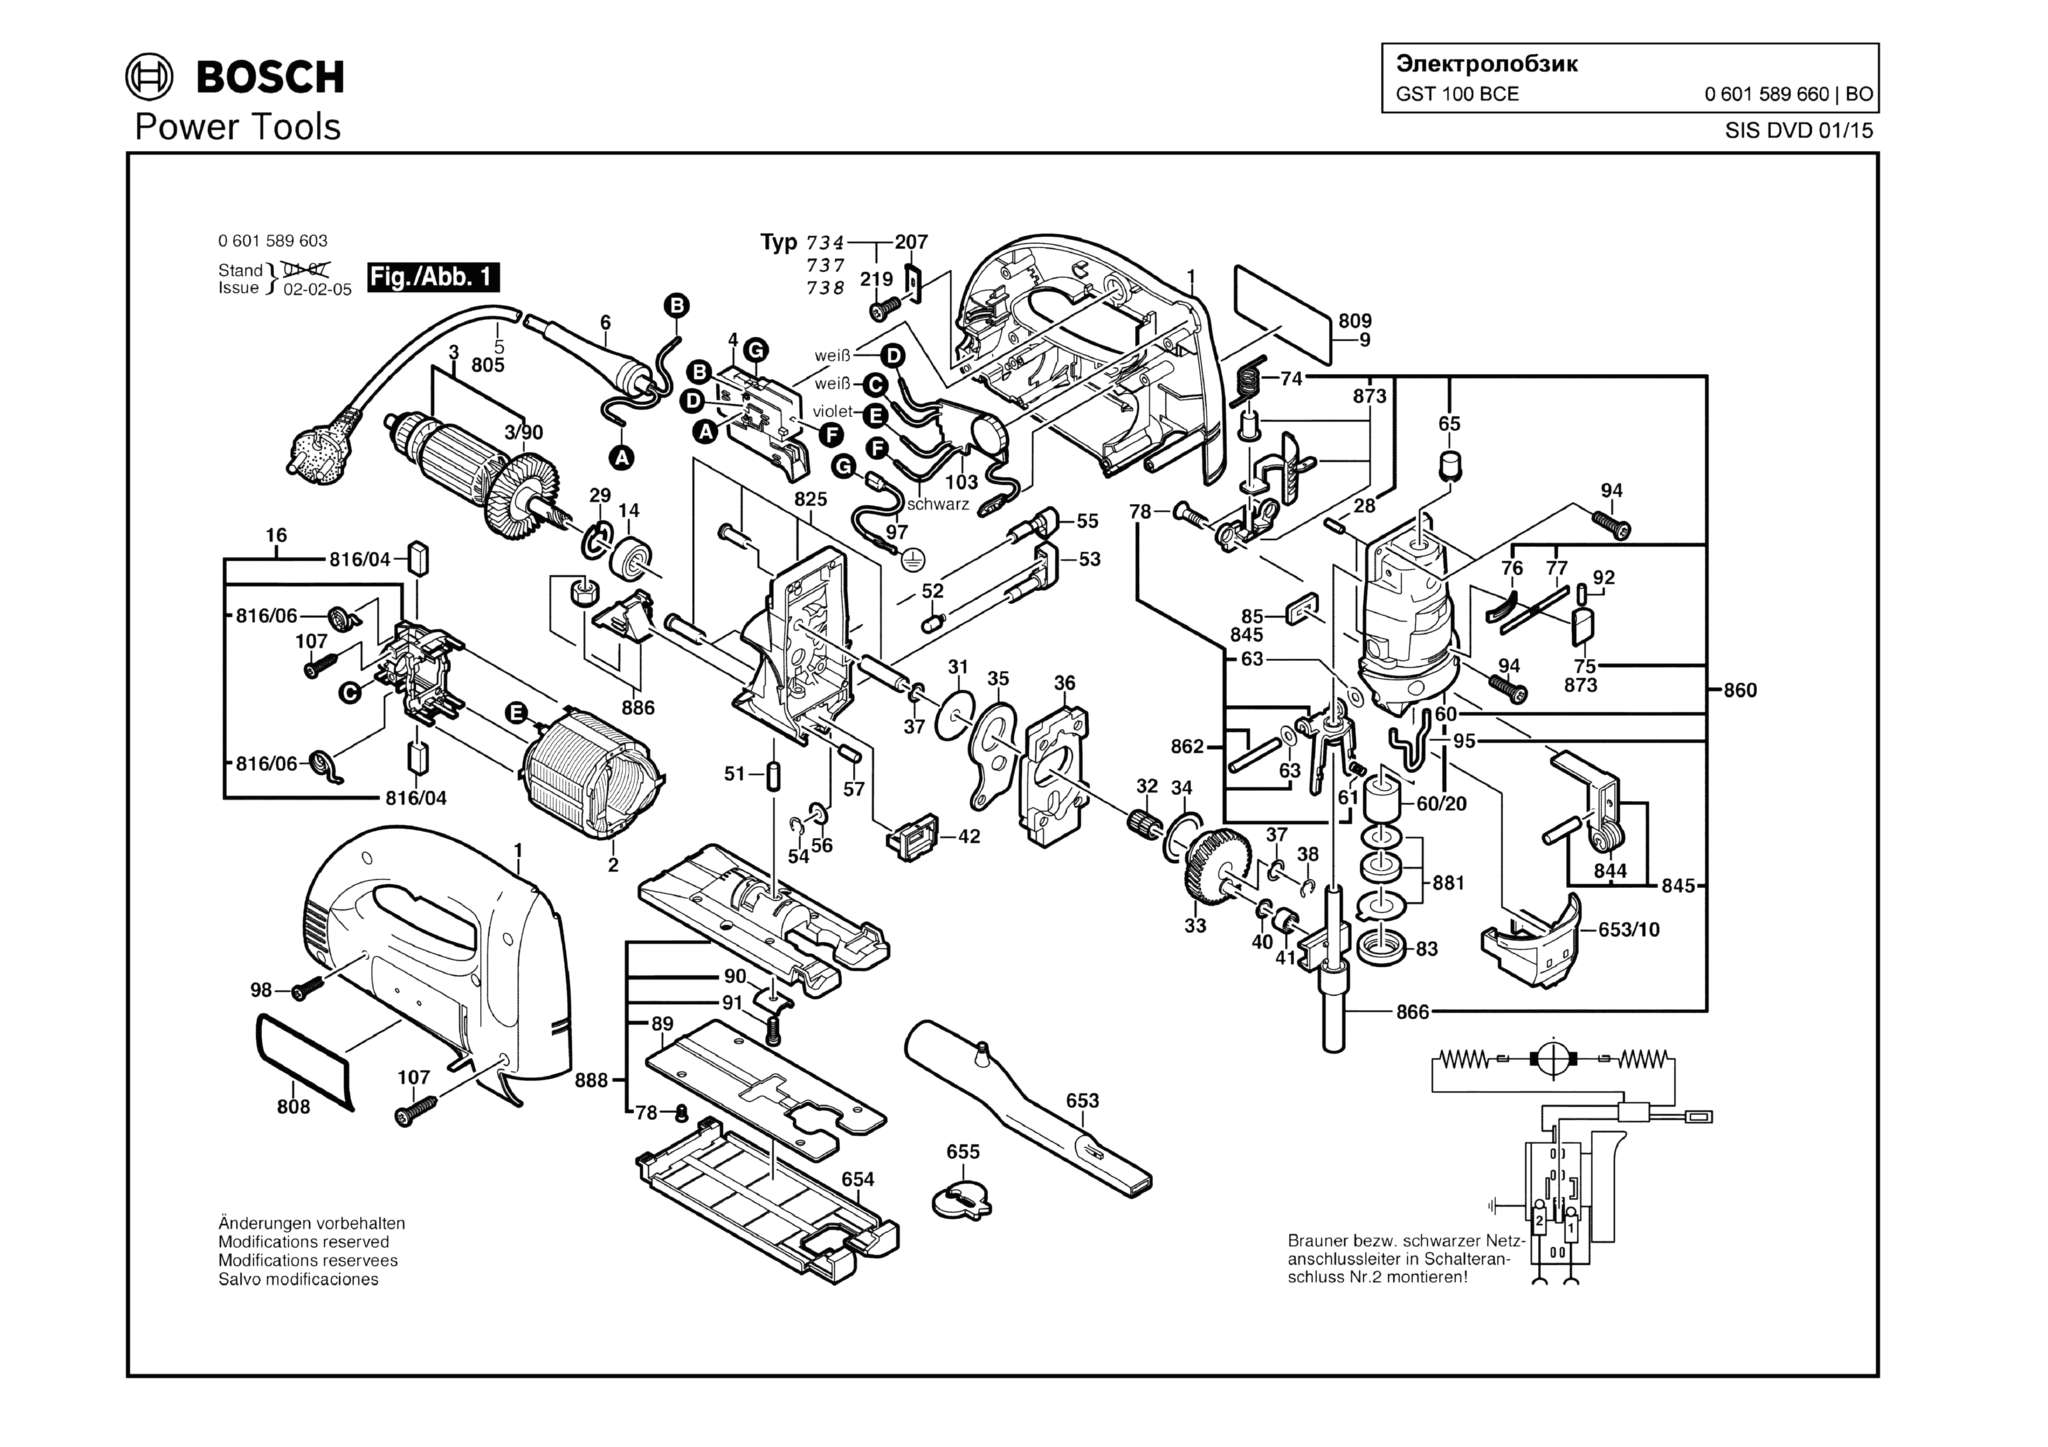 Запчасти, схема и деталировка Bosch GST 100 BCE (ТИП 0601589660)